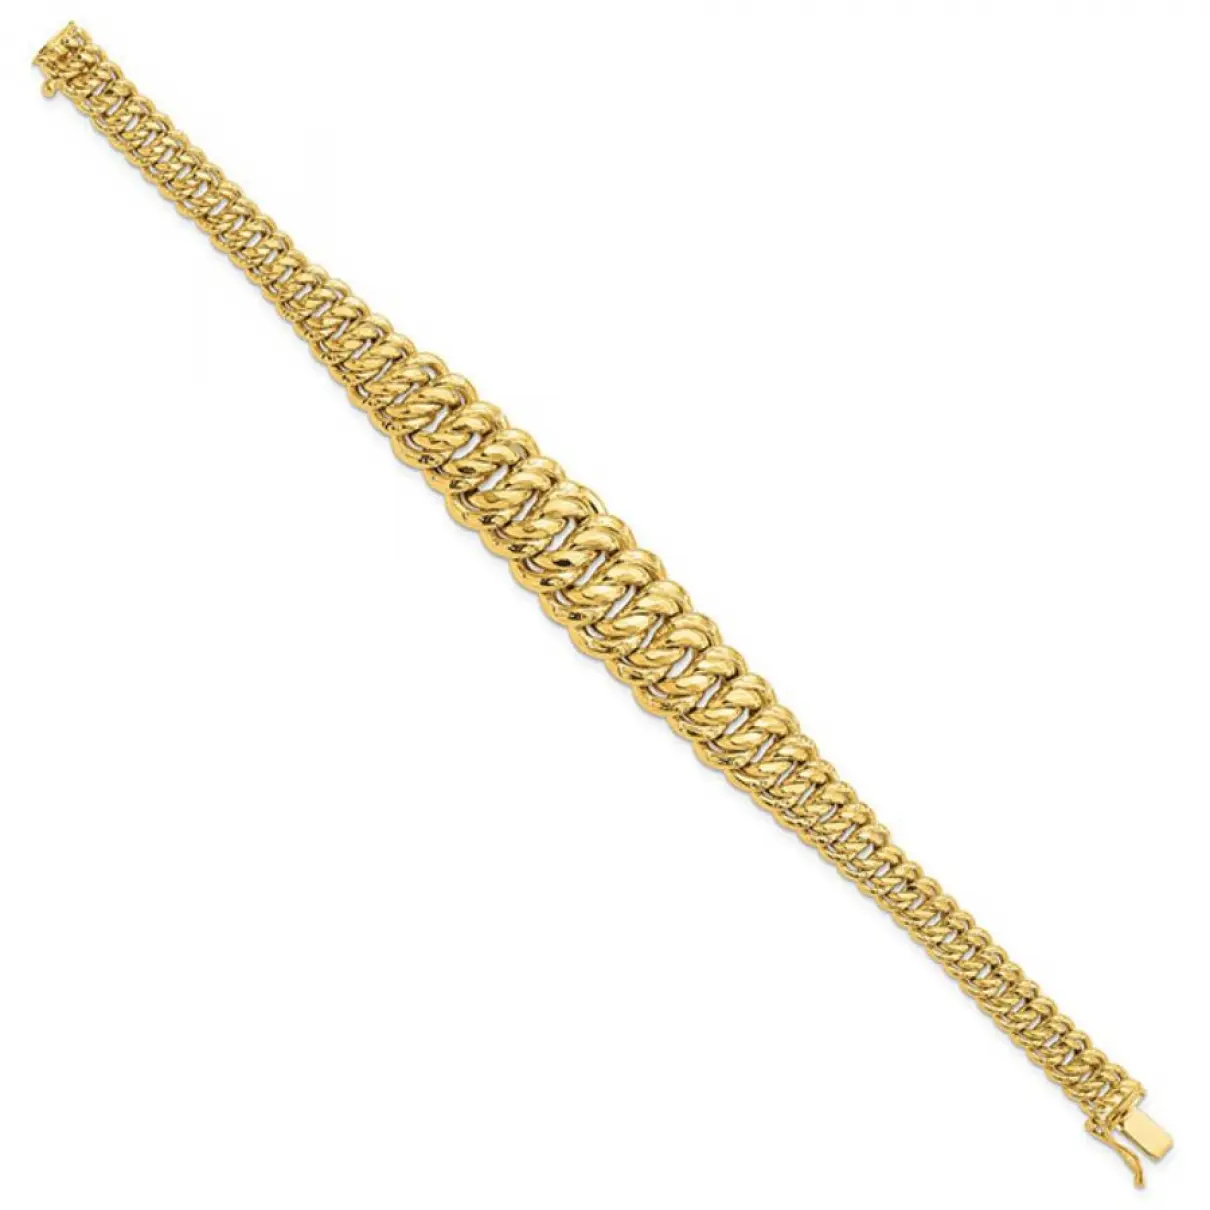 Buy Apple Yellow gold bracelet online